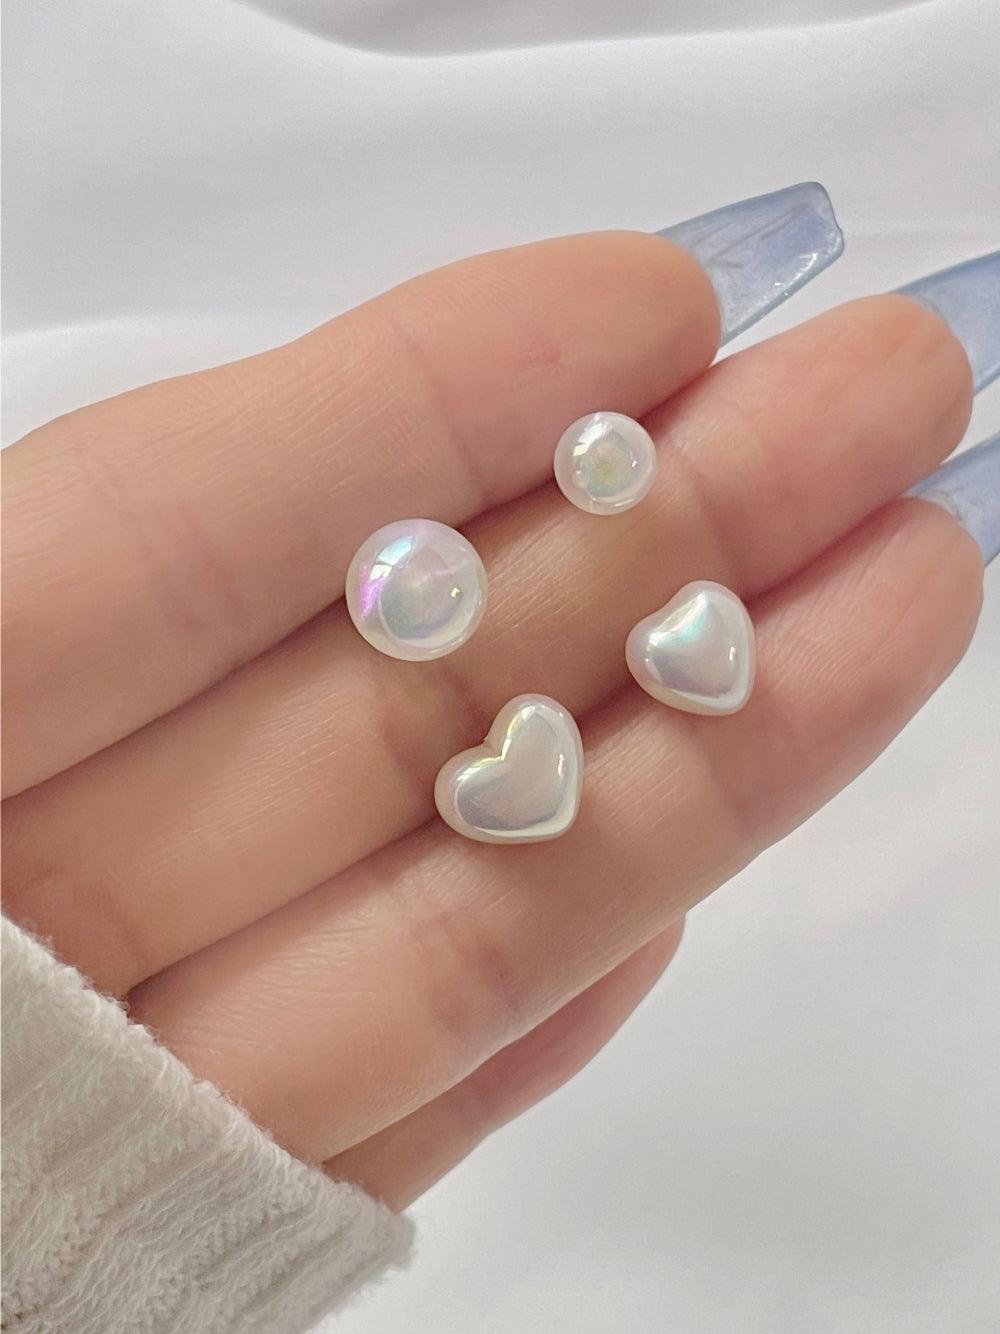 [925 Silver]ホログラム真珠ピアス Earrings bling moon 